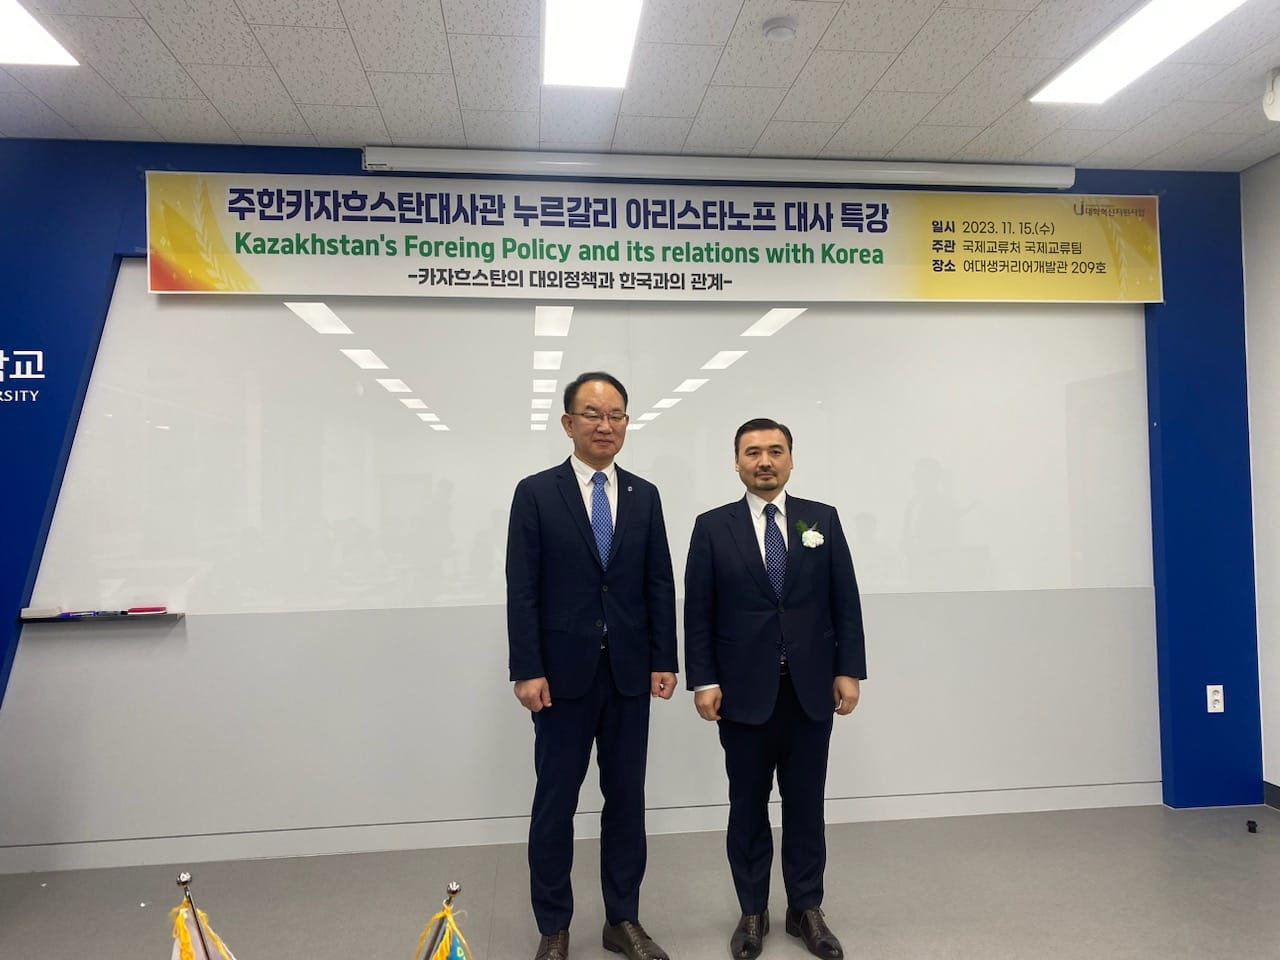 Kazakhstan's Ambassador to Korea, Nurgali Arystanov and Dong-Eui UniversityPresident Han Soo-whan pose for a photo at Dong-Eui University in Busan on Wednesday. (Kazakh Embassy in Seoul)